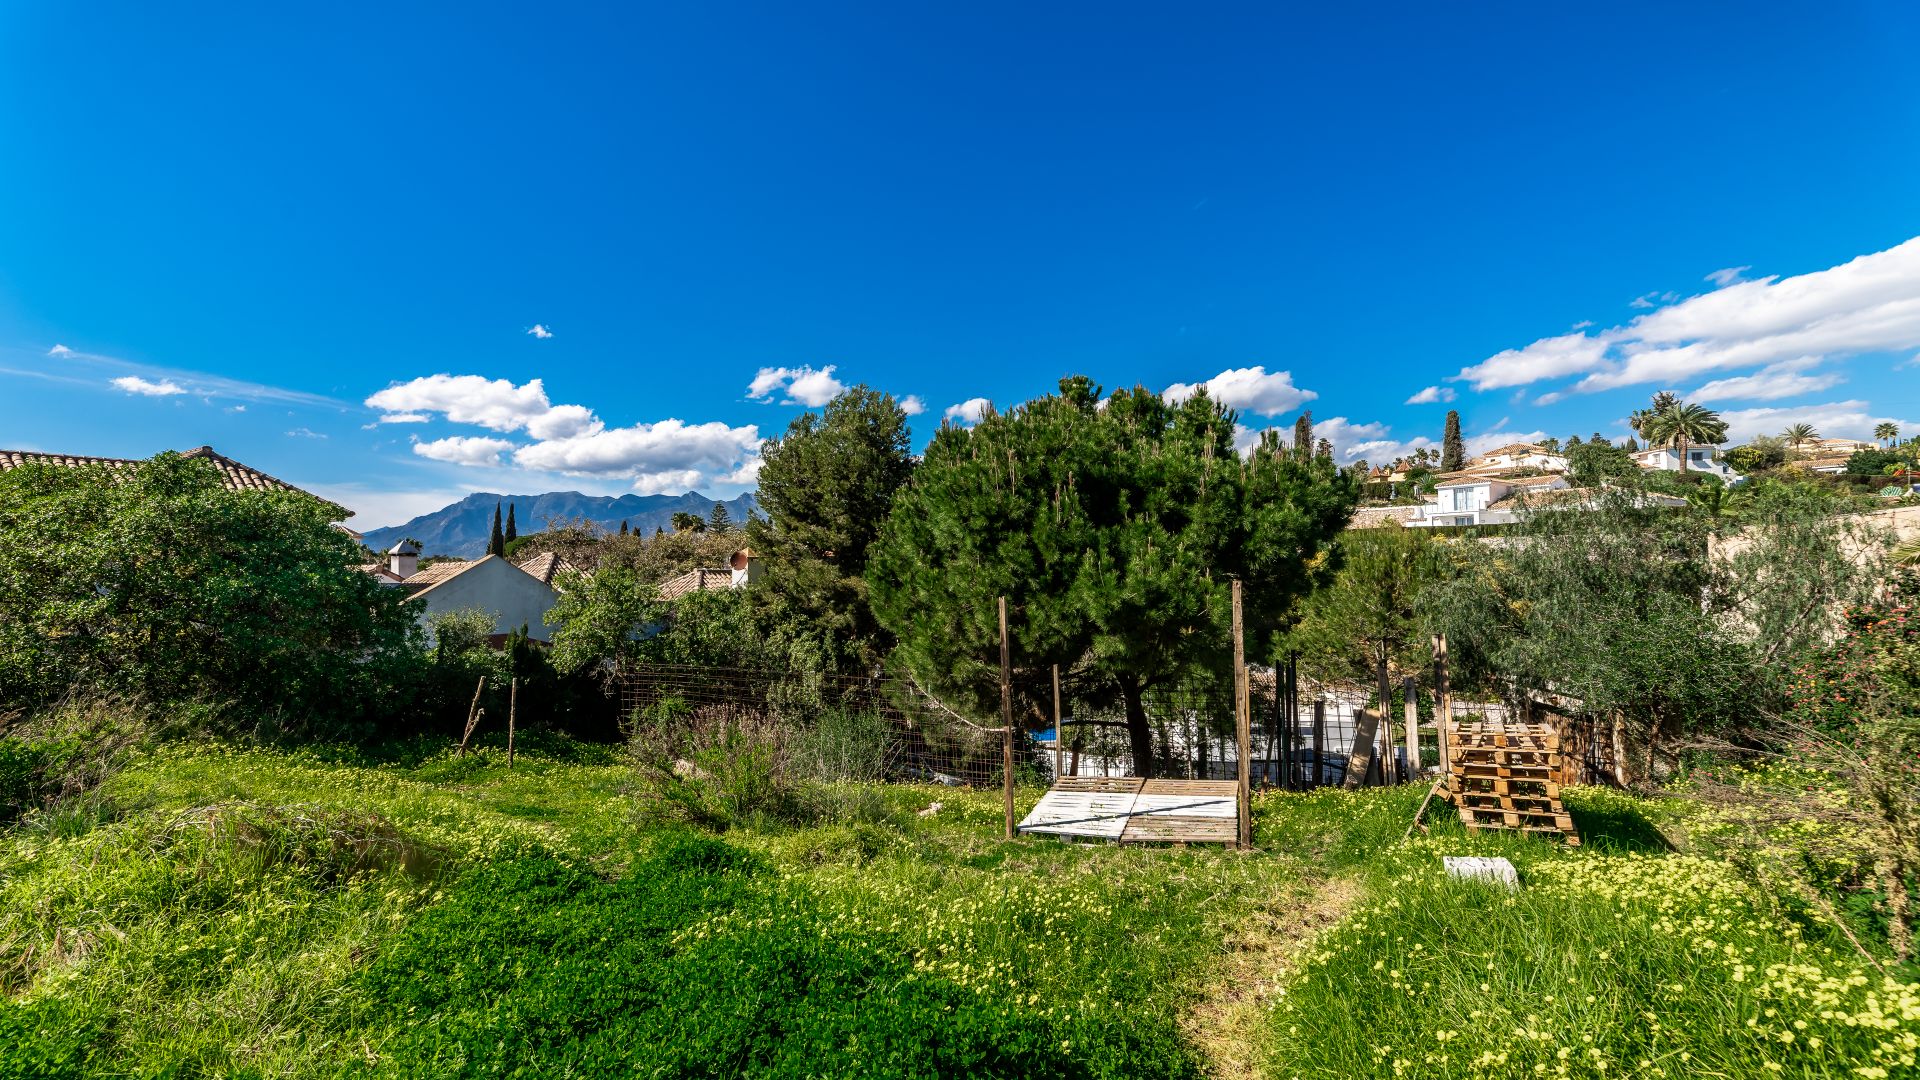 Grundstück zum Bau einer Villa in der Urbanisation El Rosario, Marbella Ost | Engel & Völkers Marbella